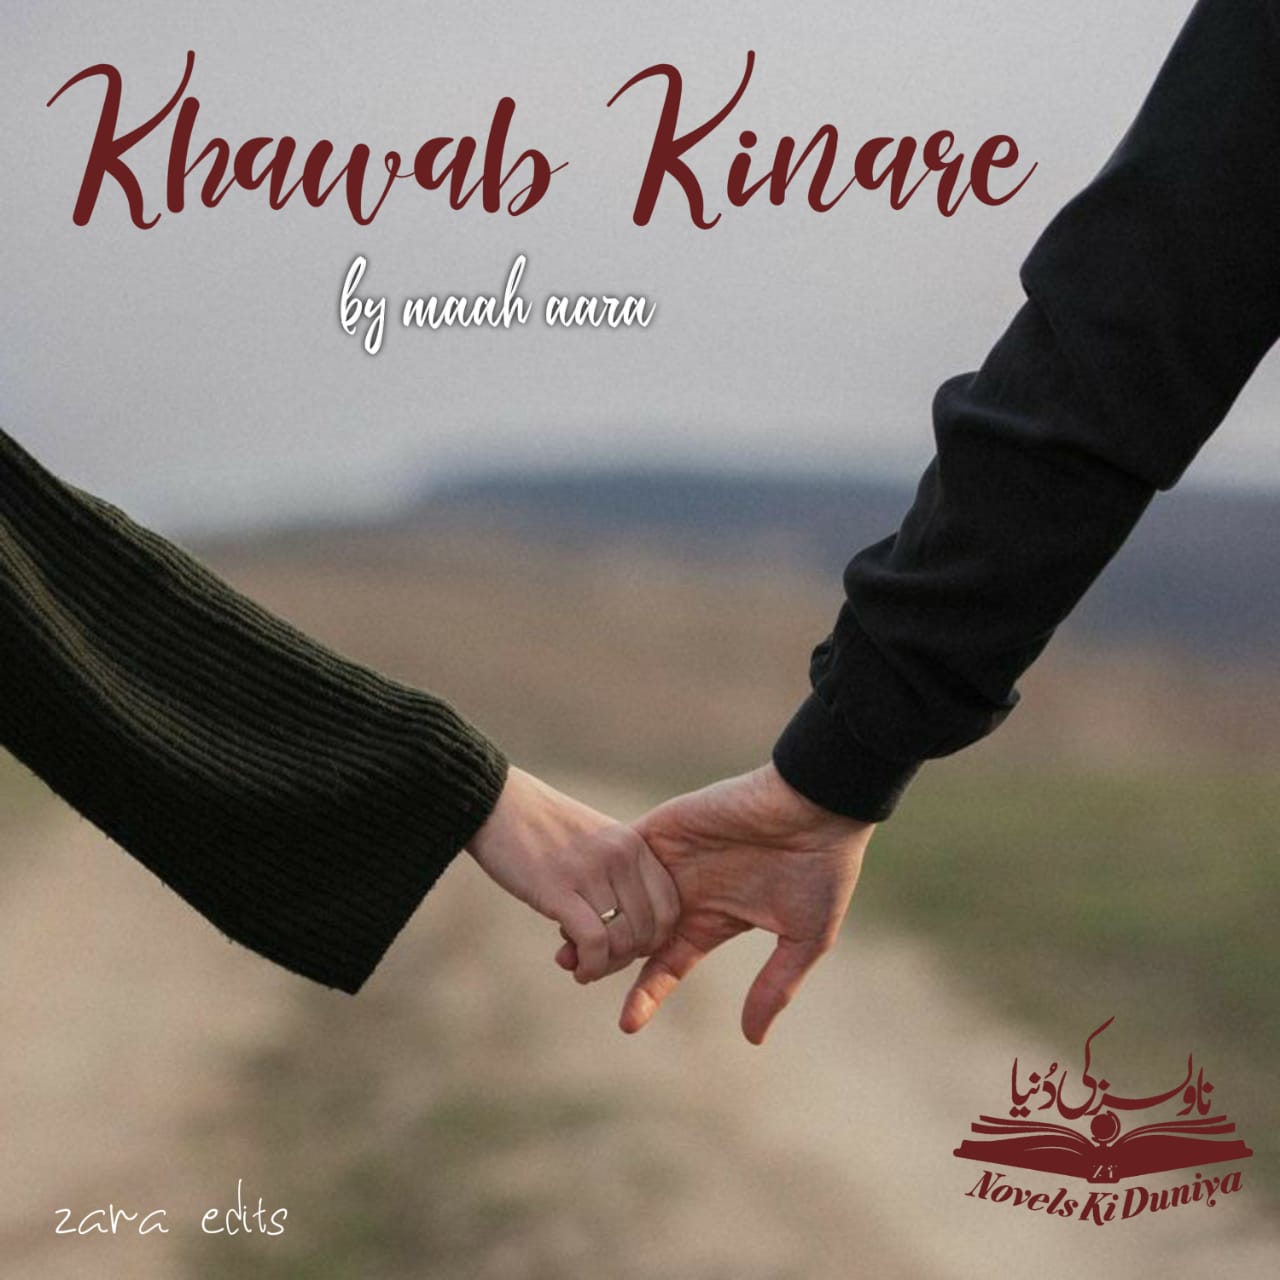 Khuwab Kinare